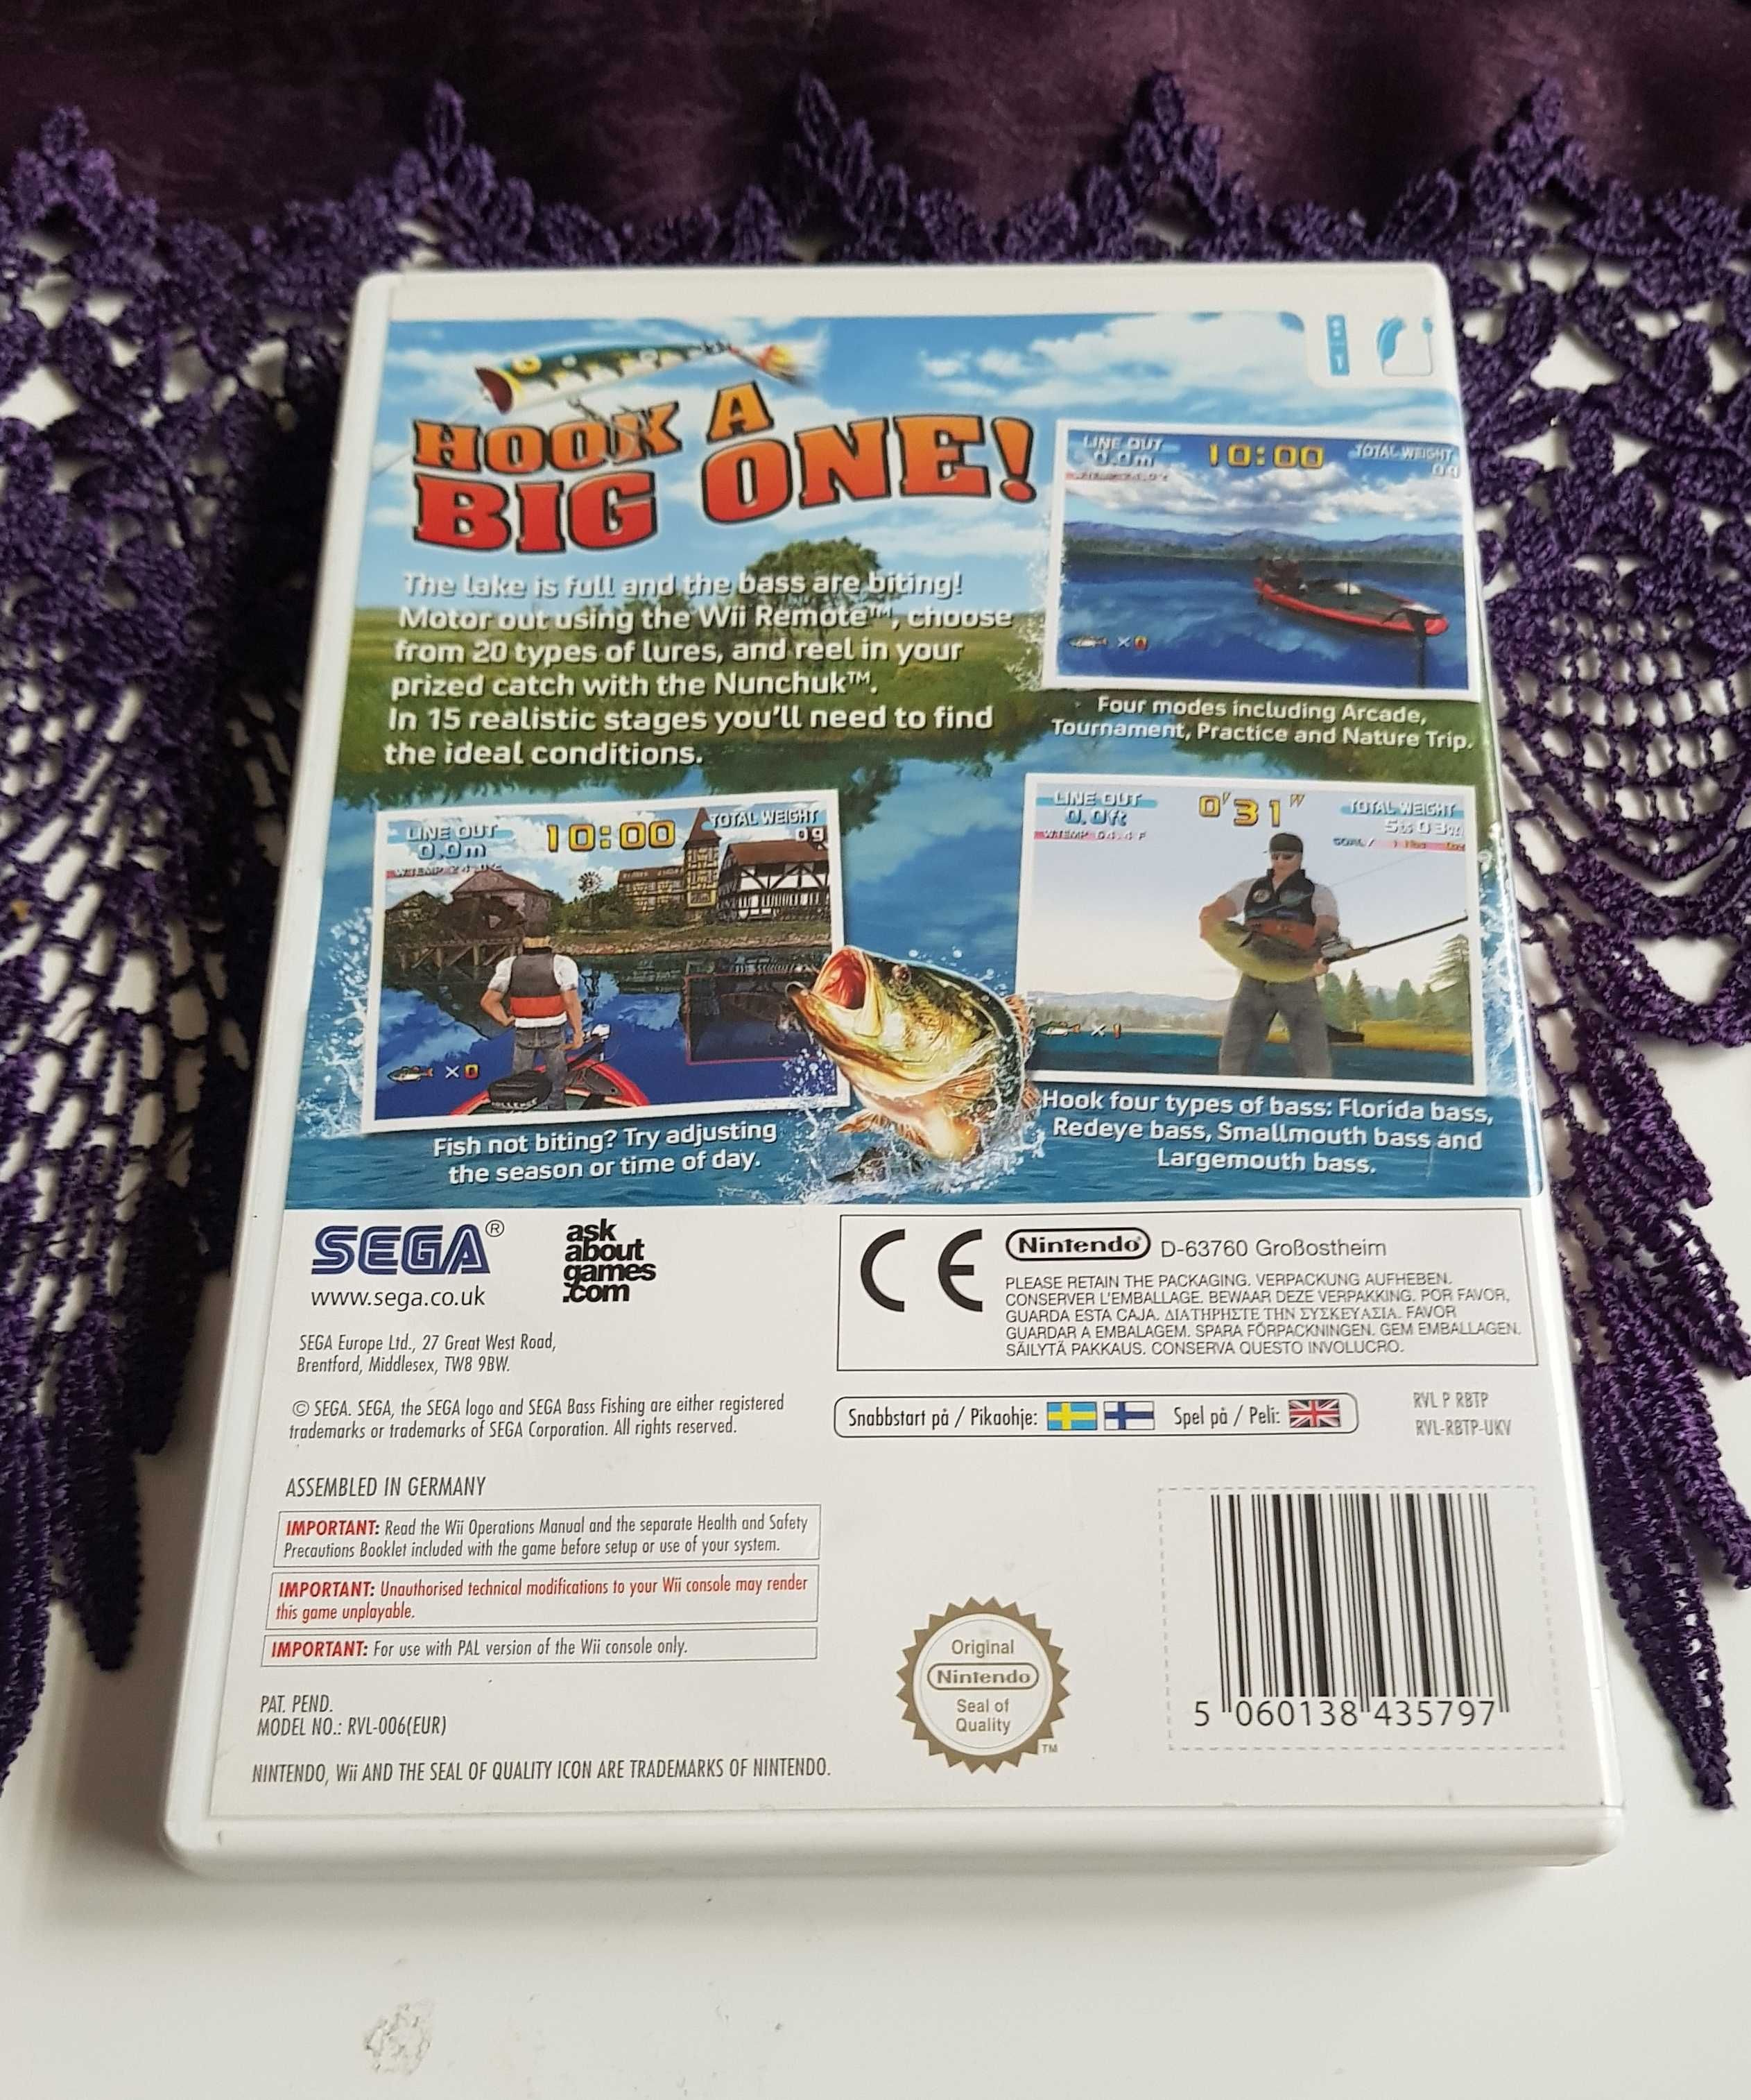 Gra Sega Bass Fishing Nintendo Wii